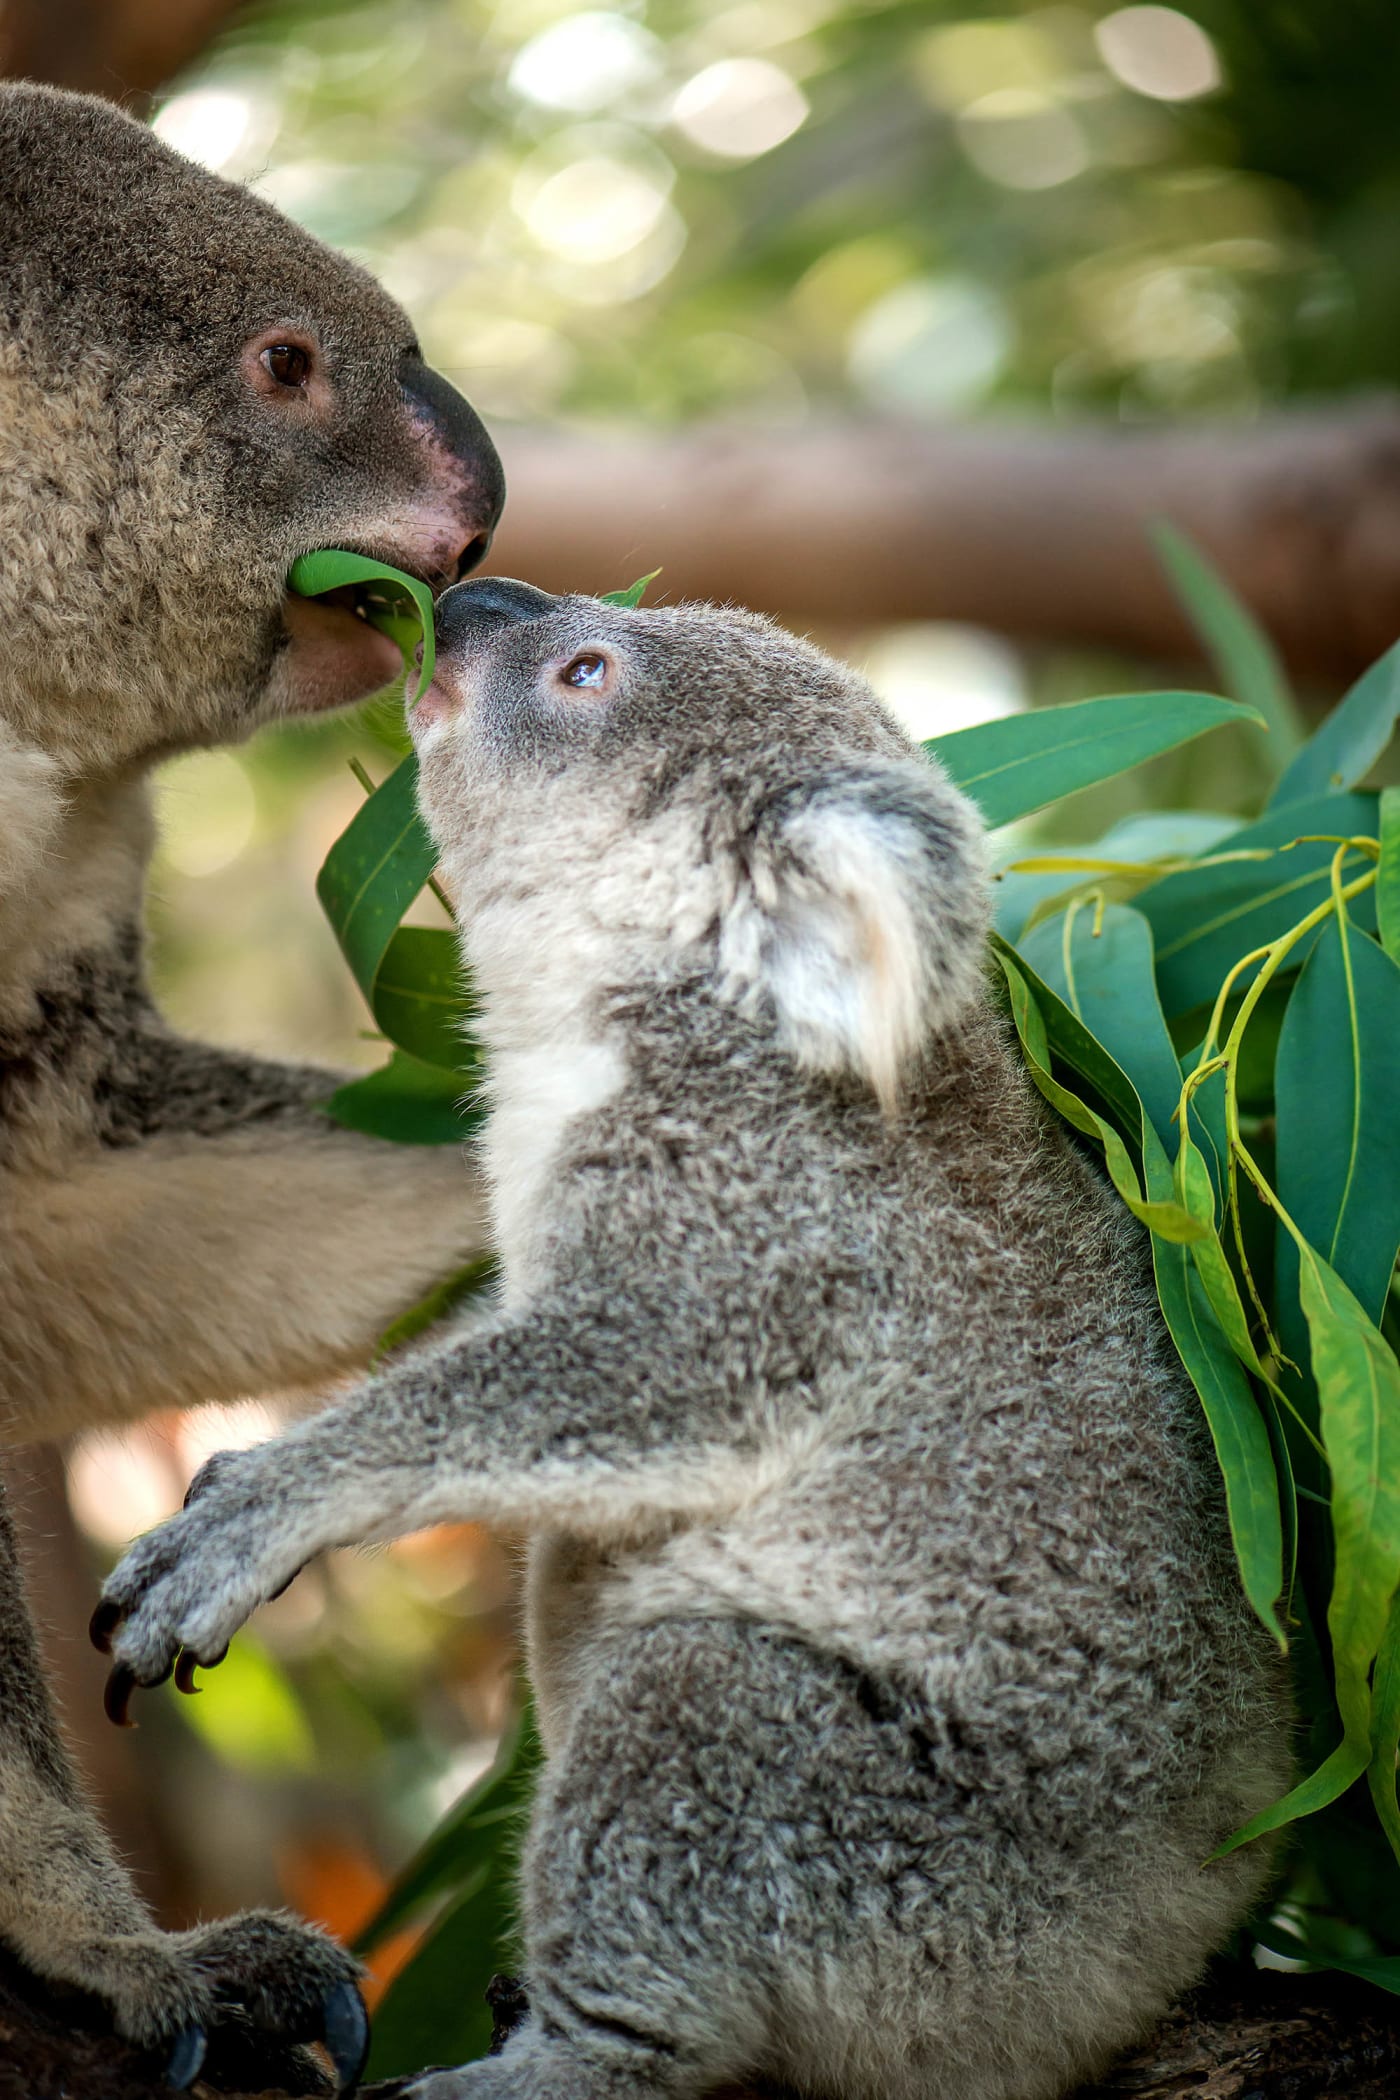 Koala joey (Phascolarctos cinereus) and mom eating Eucalyptus leaf